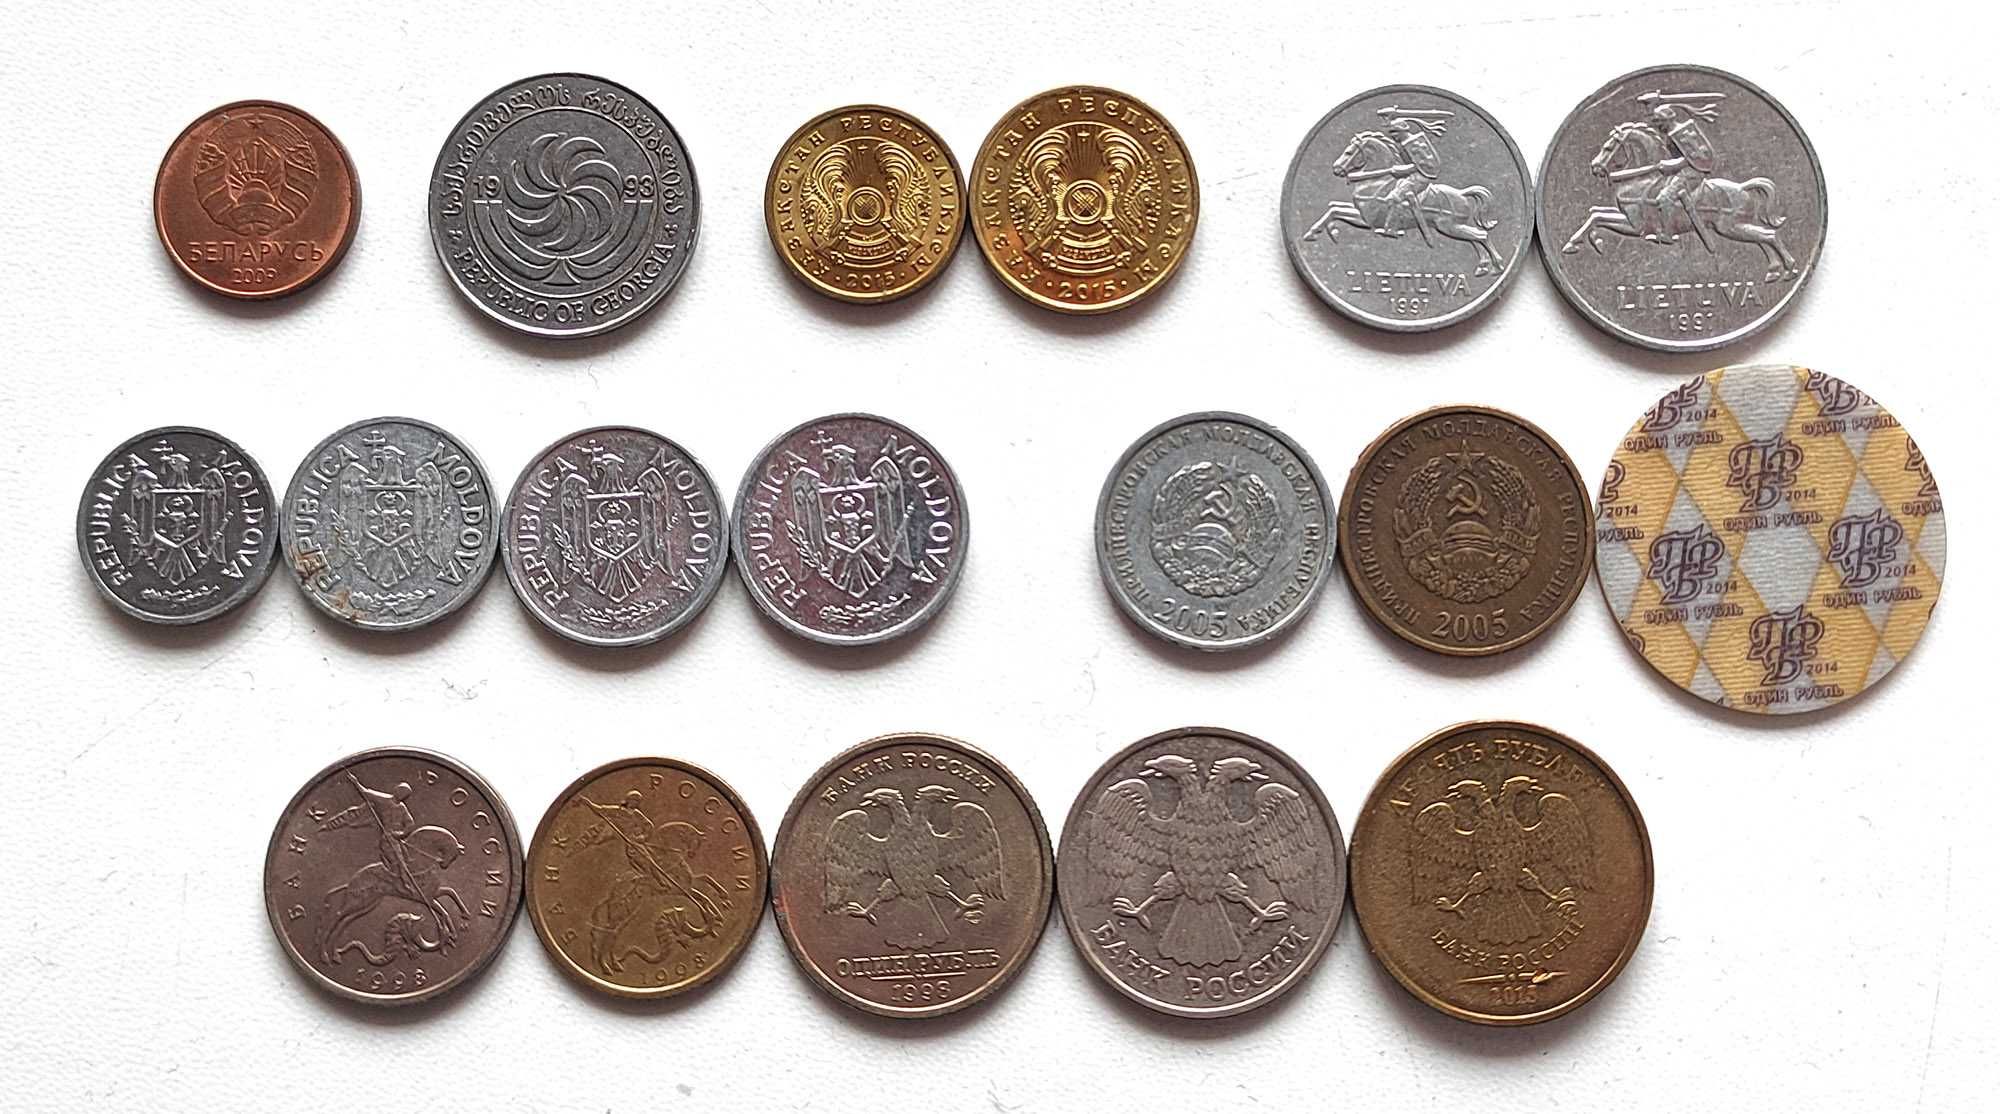 Монеты Казахстан, Молдавия, Грузия, Беларусь, рашка, 18 шт